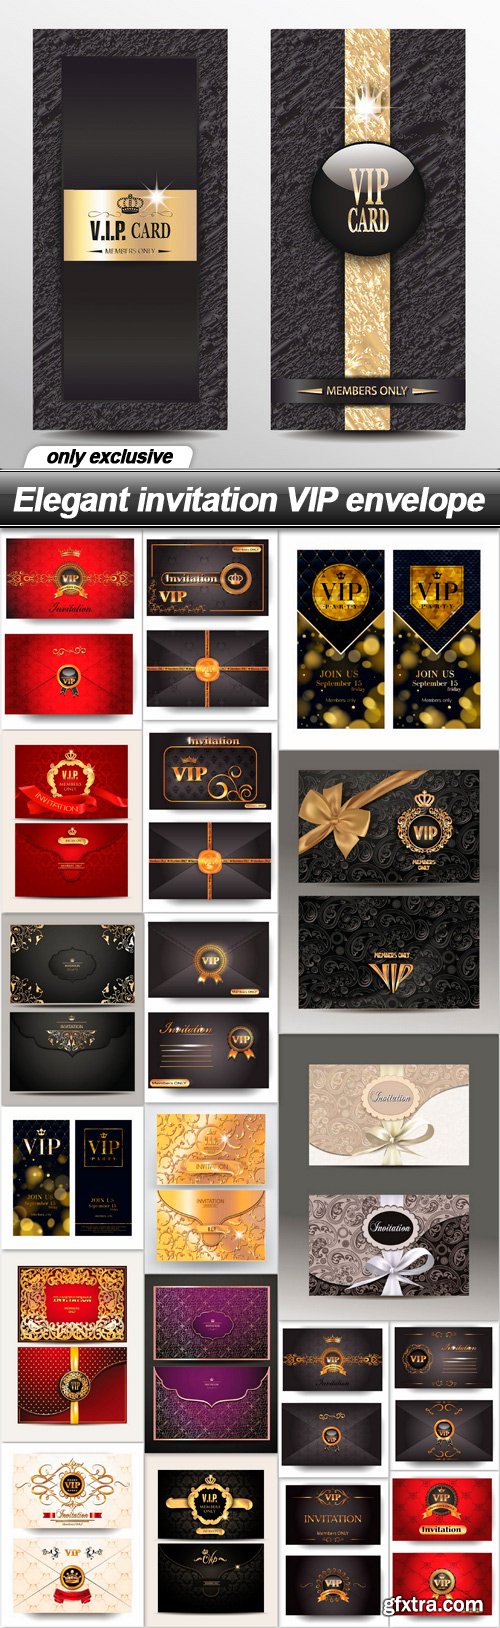 Elegant invitation VIP envelope - 20 EPS